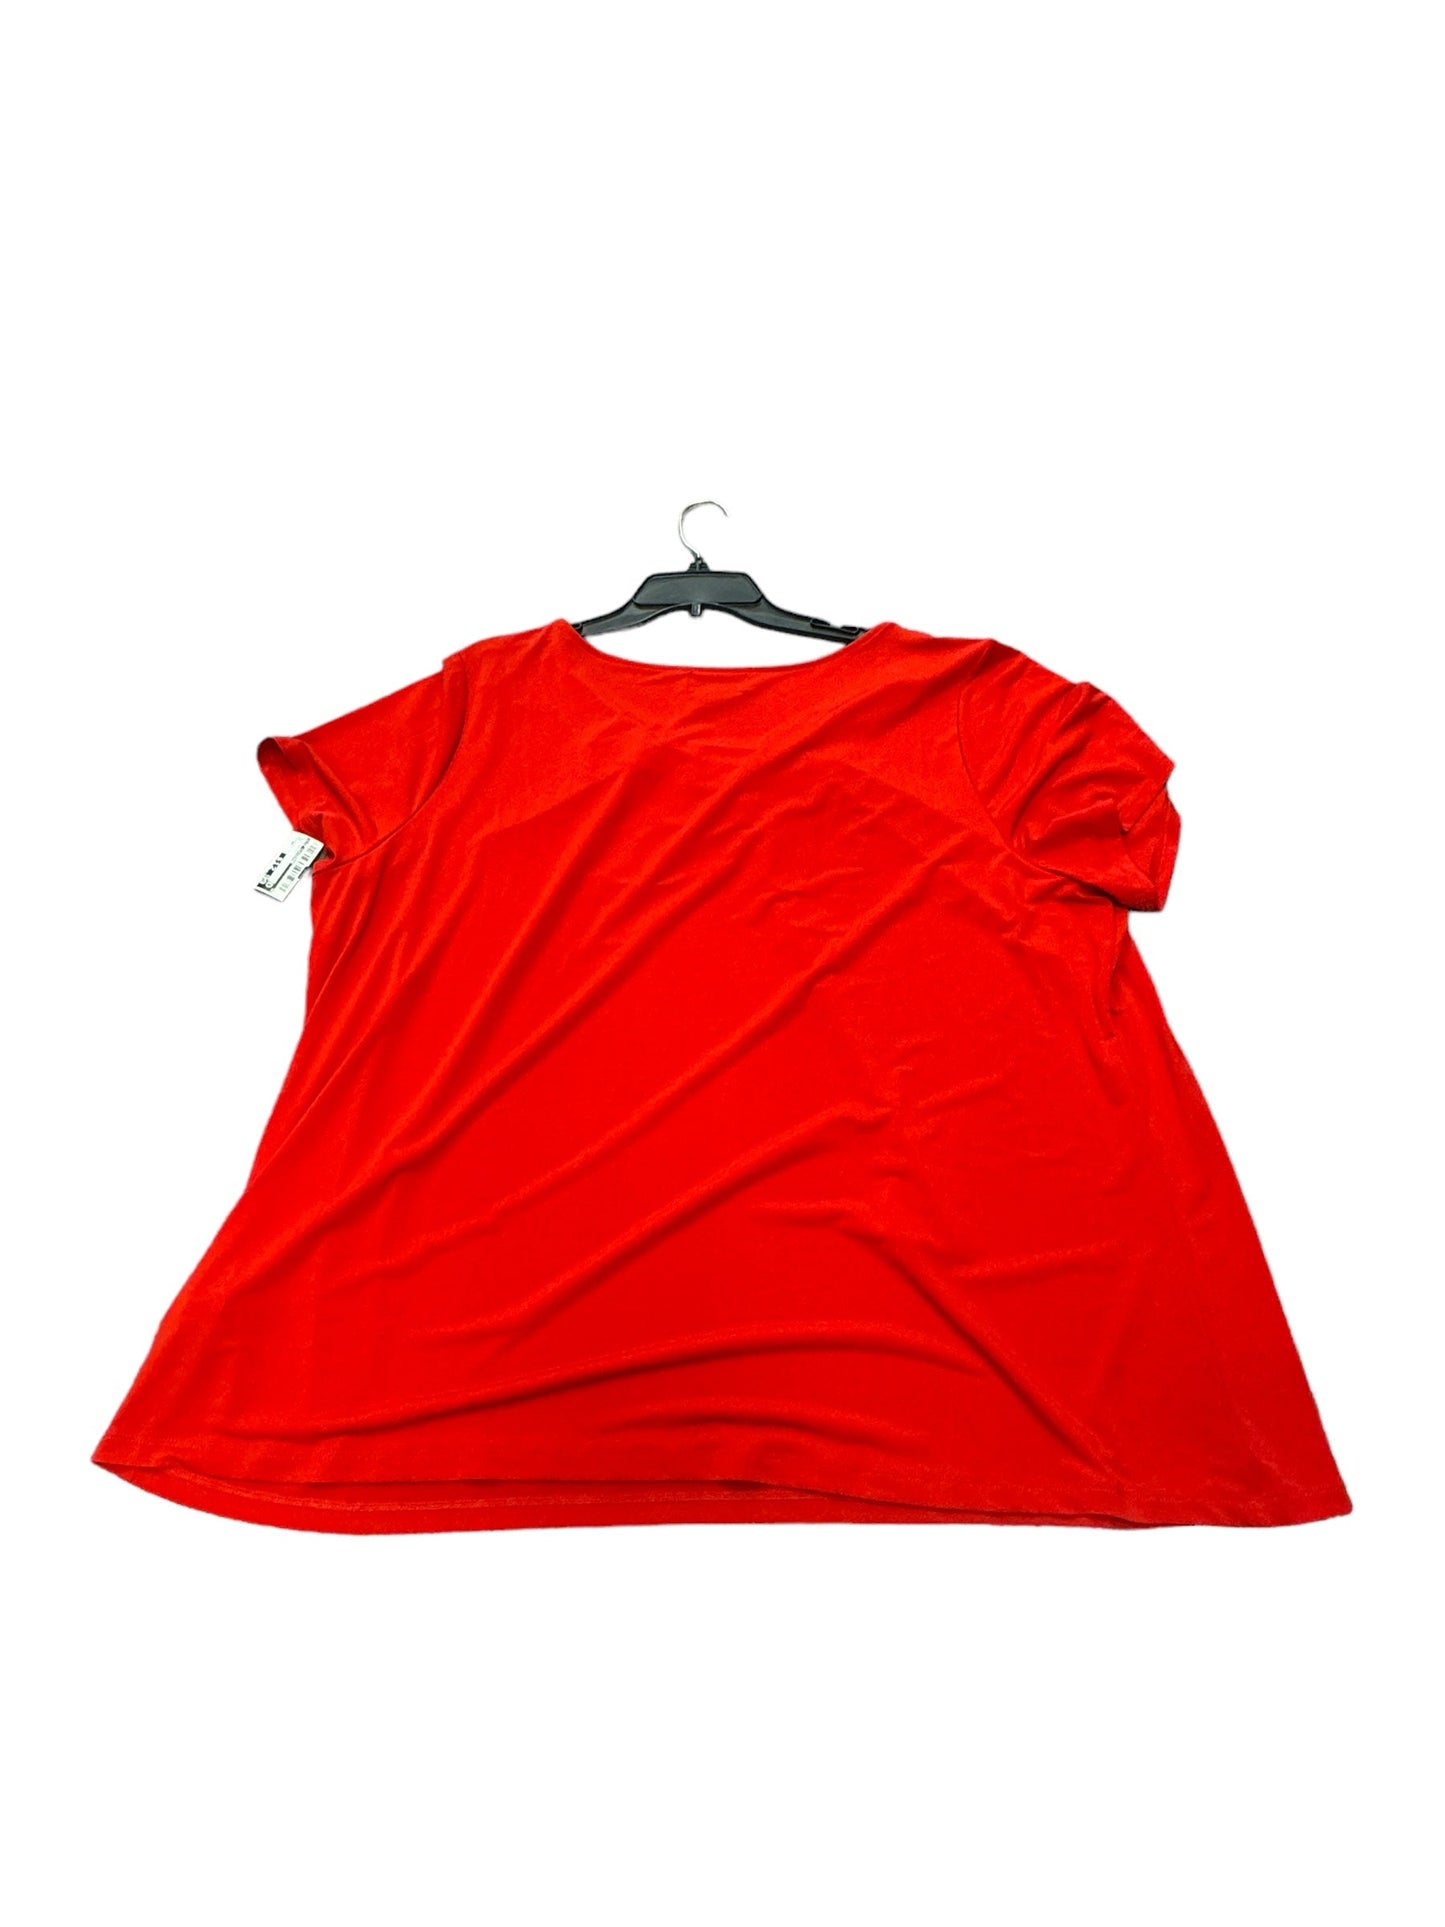 Blouse Short Sleeve By Liz Claiborne  Size: 3x